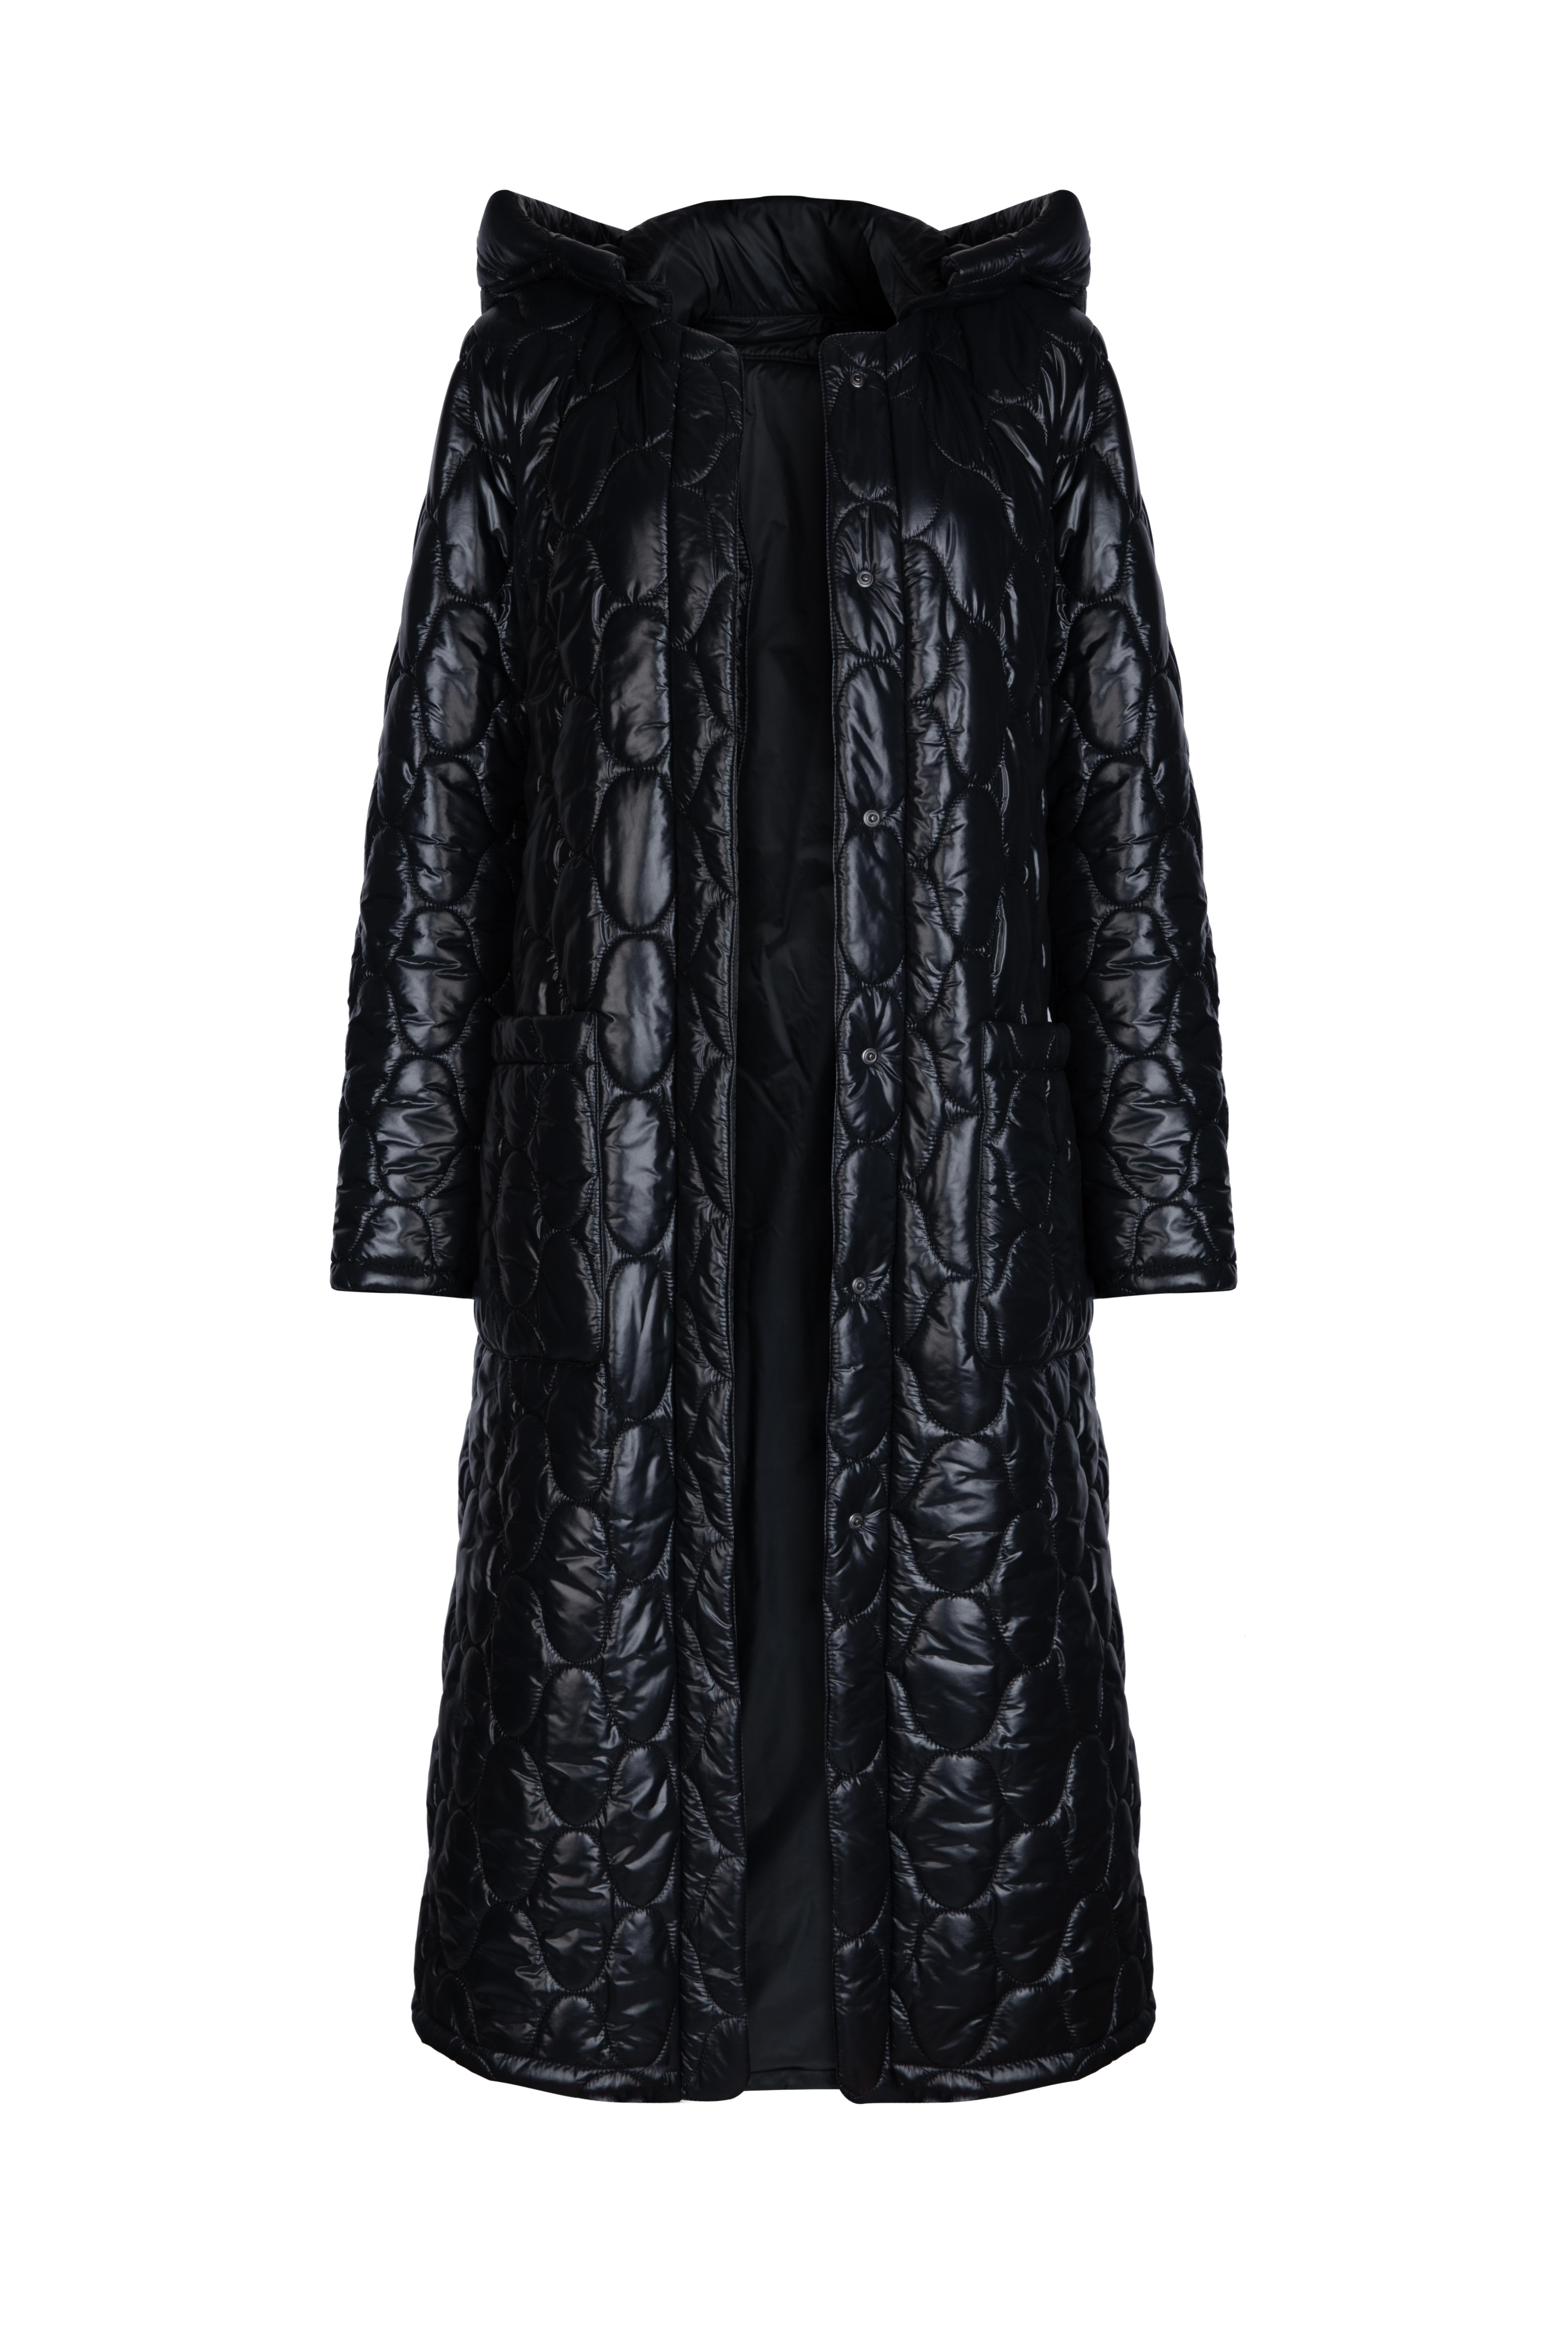 Verheyen London Aurora Gesteppter Mantel mit abnehmbarer Kapuze - Größe Uk 14 im Angebot 4